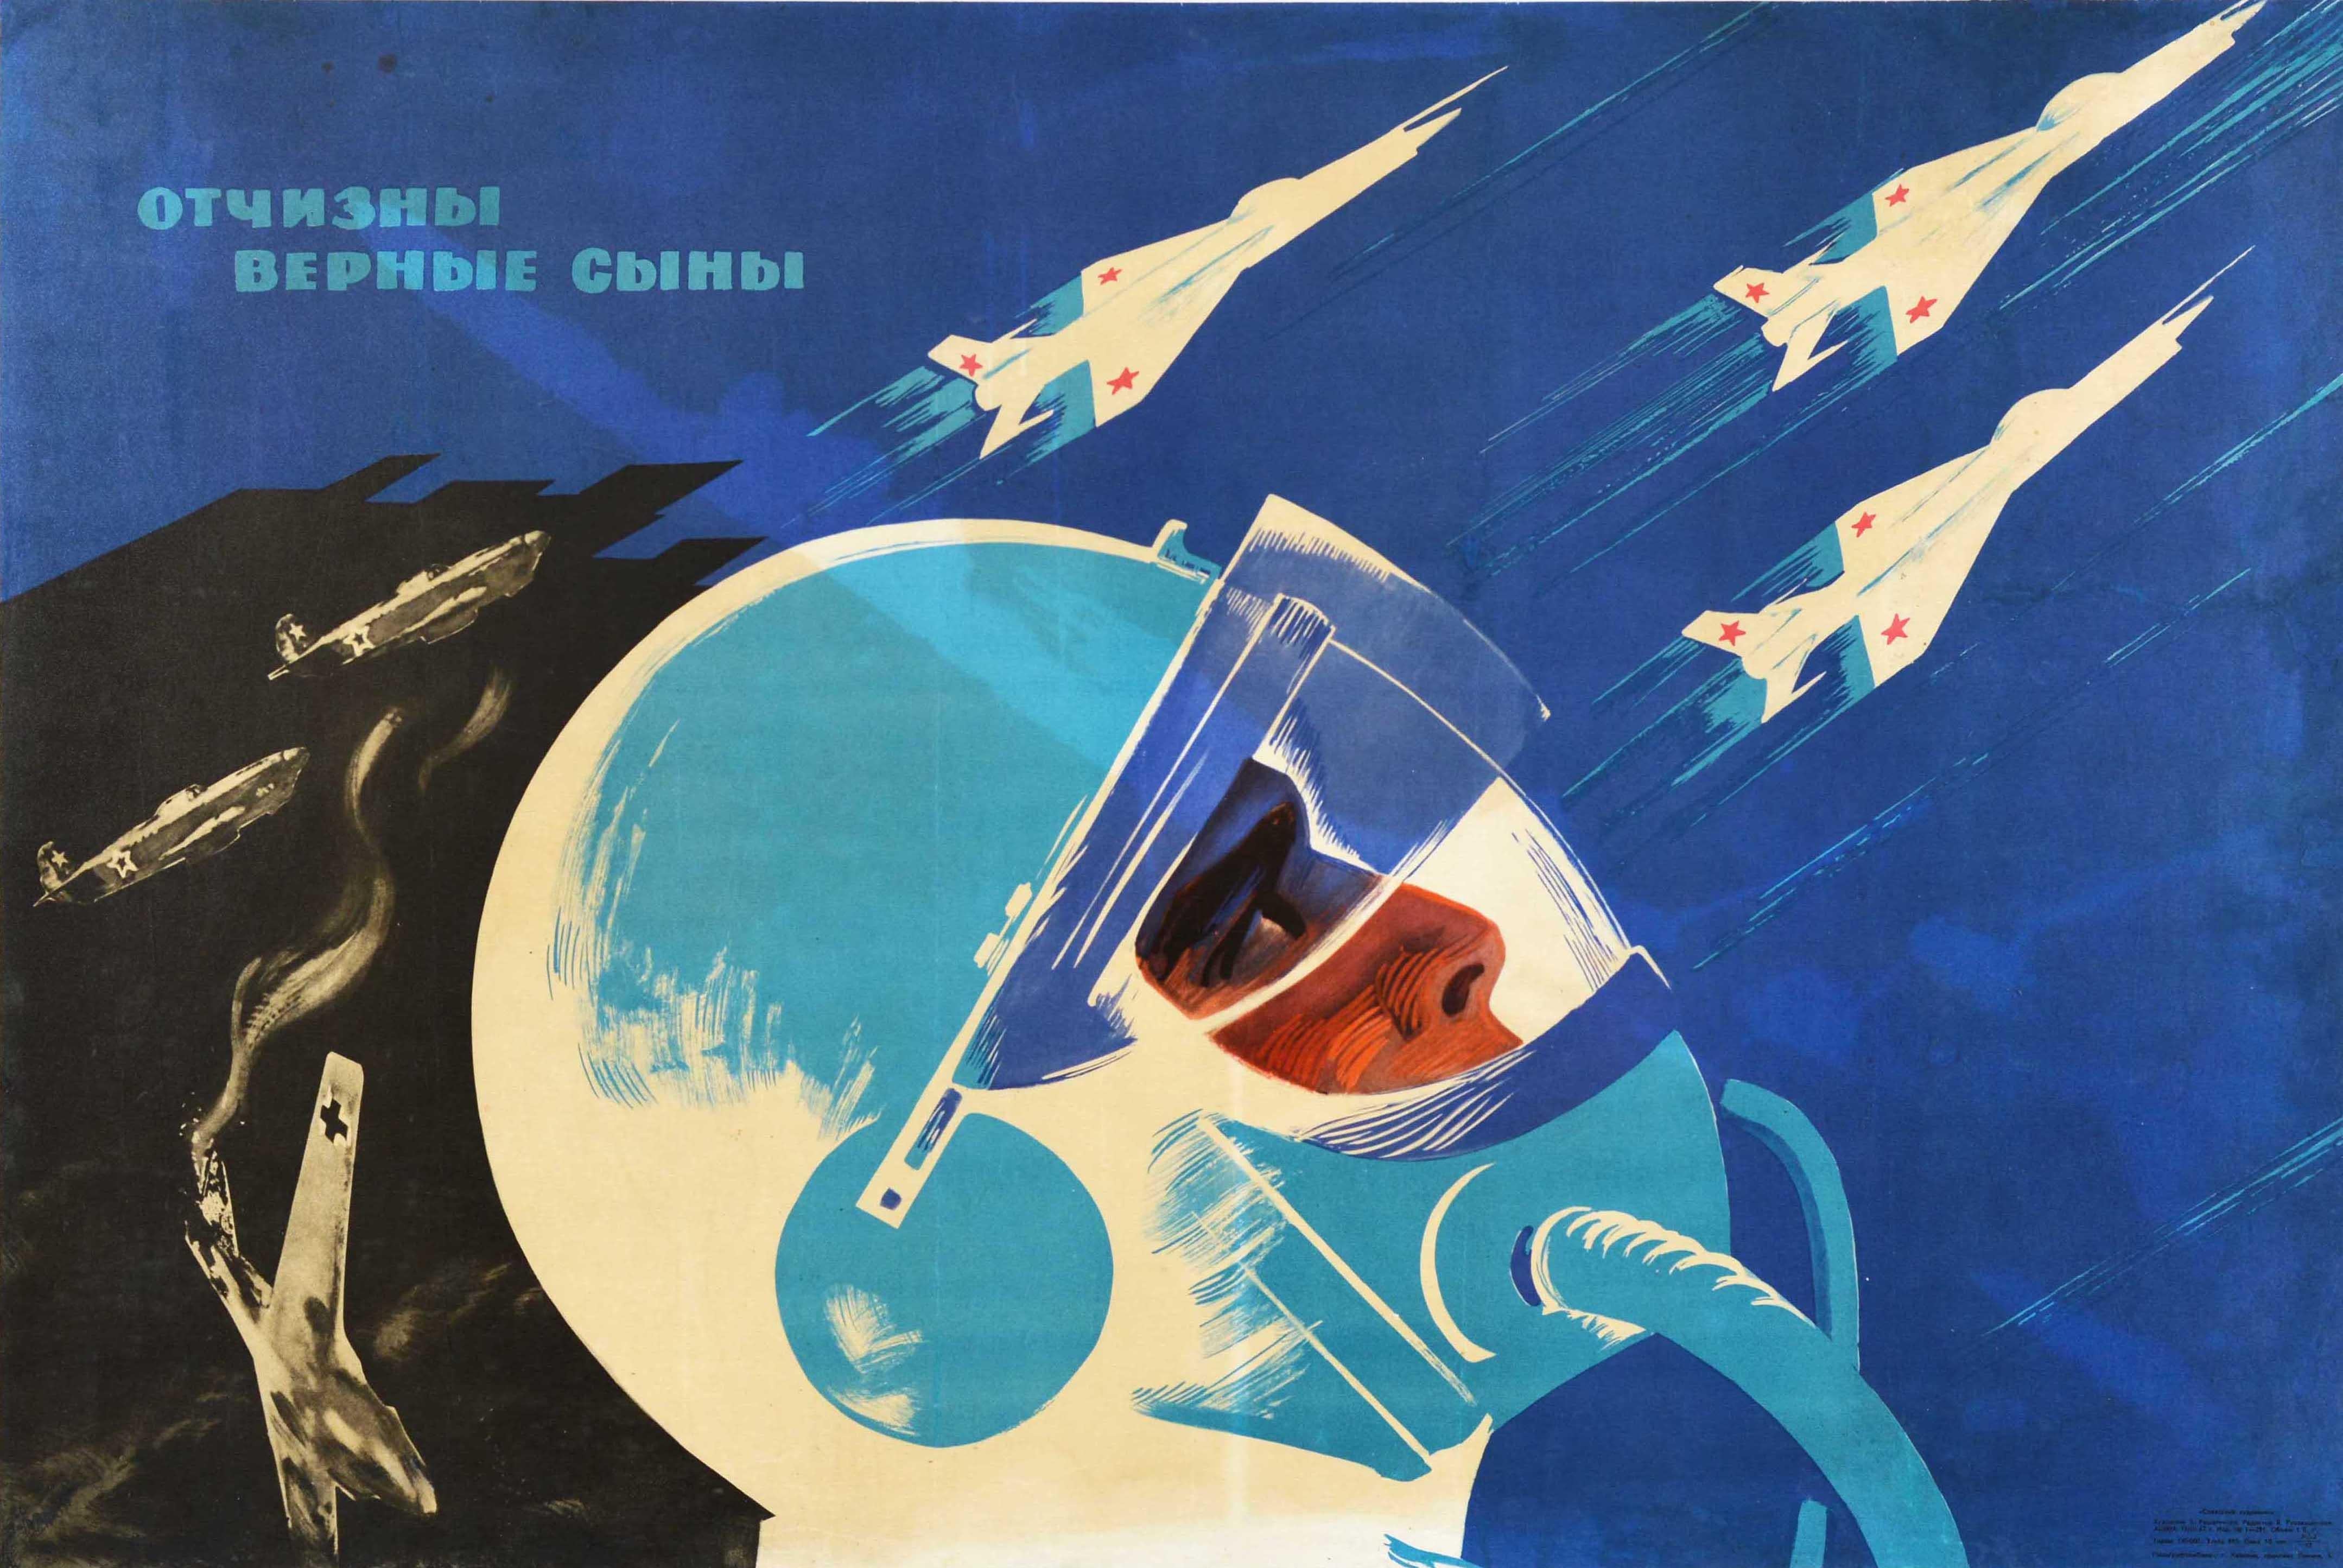 B. Reshetnikov Print - Original Vintage Soviet Space Poster USSR Jet Pilots Loyal Sons Of Fatherland